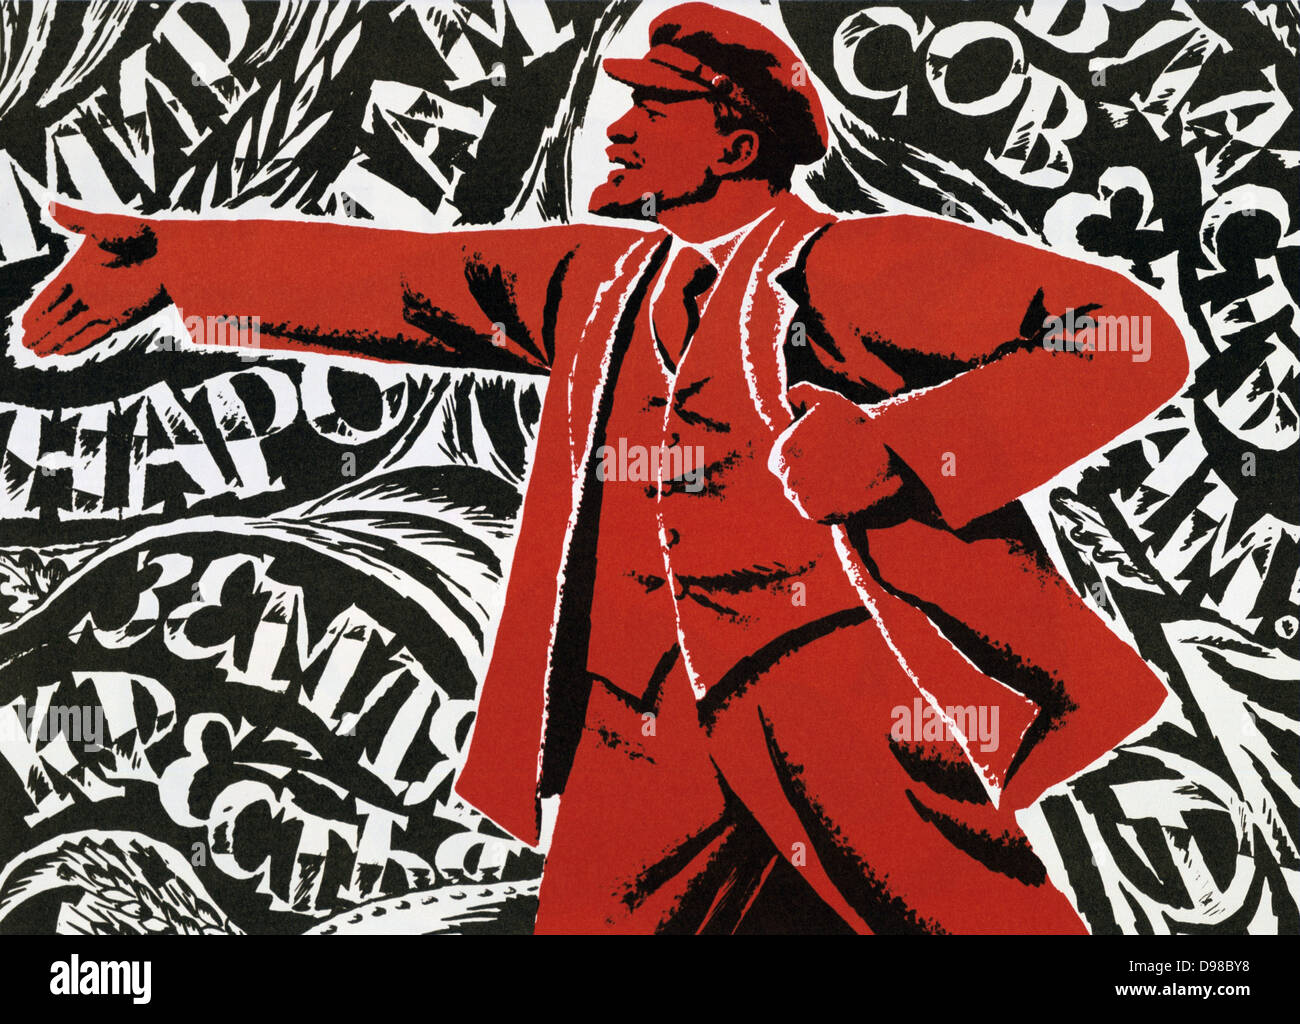 Rivoluzione Russa, ottobre 1917. Vladimir Ilyich Lenin (Ulyanov - 1870-1924). Non datata manifesto comunista. Foto Stock